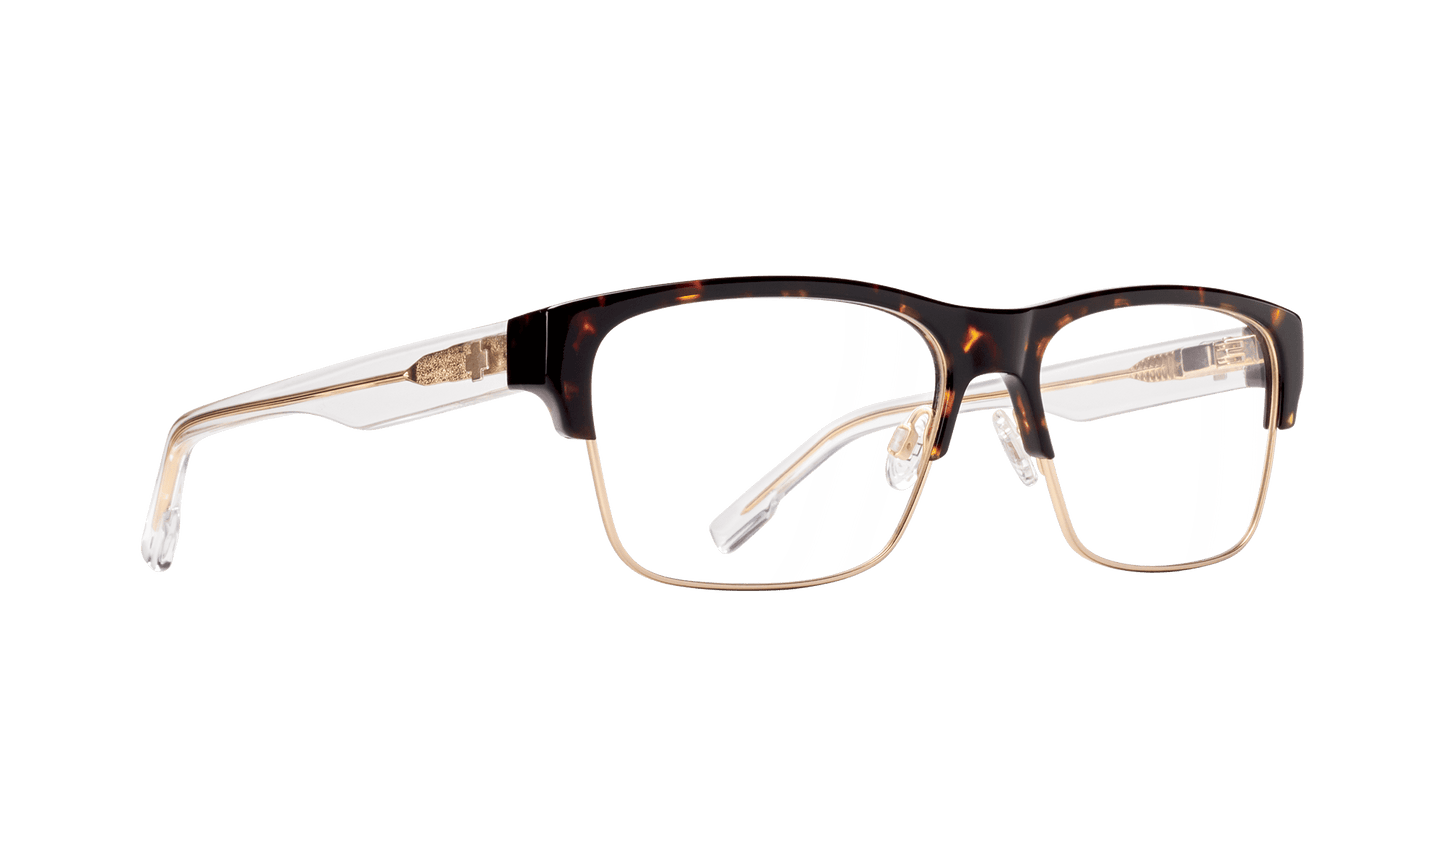 SPY Brody 50/50 59 Eyeglasses   
Style Selection: Brody 5050 59 - Dark Tort Crystal
 One Size